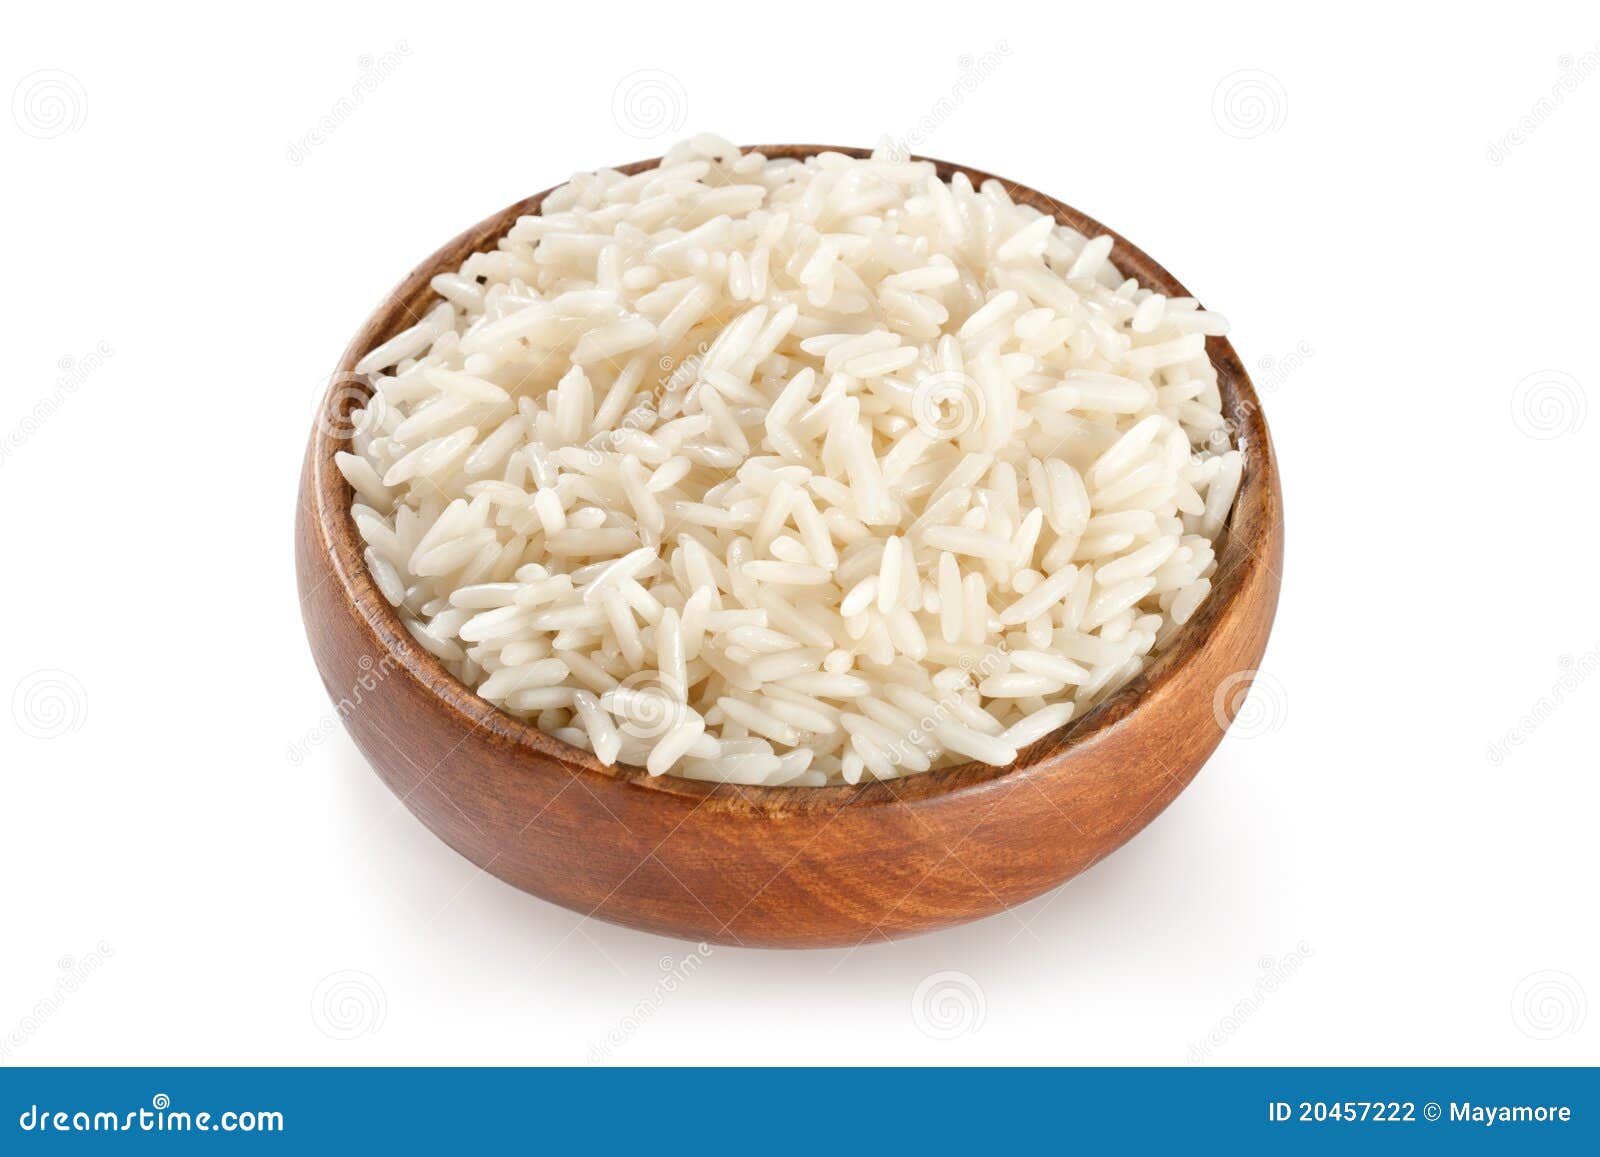 white steamed rice